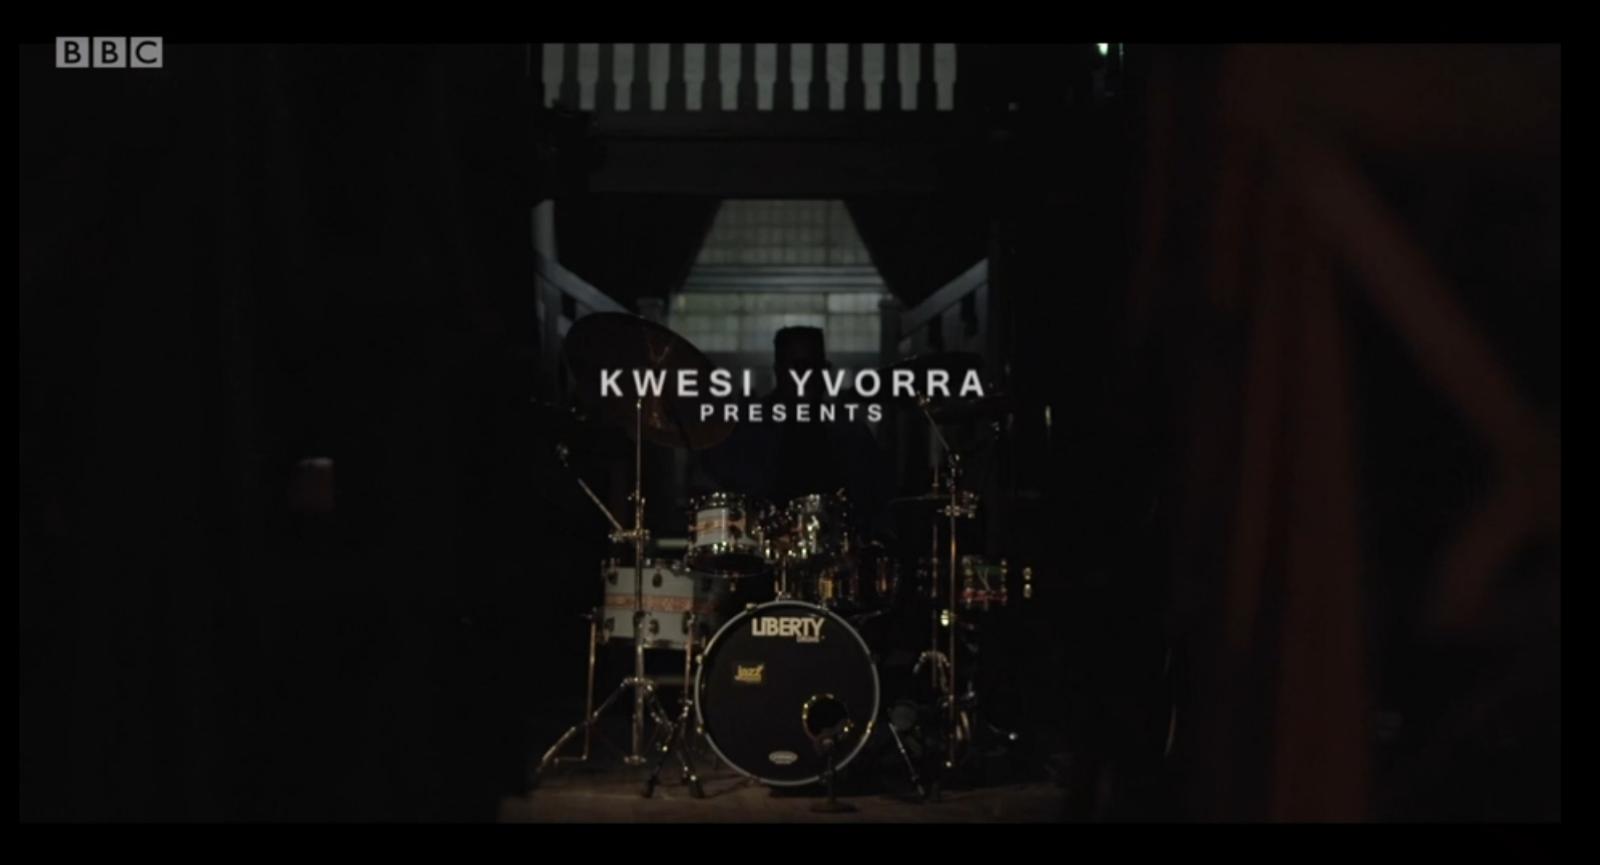 Liberty Drums with Kwesi Yvorra @bbc #wimbledon 2019